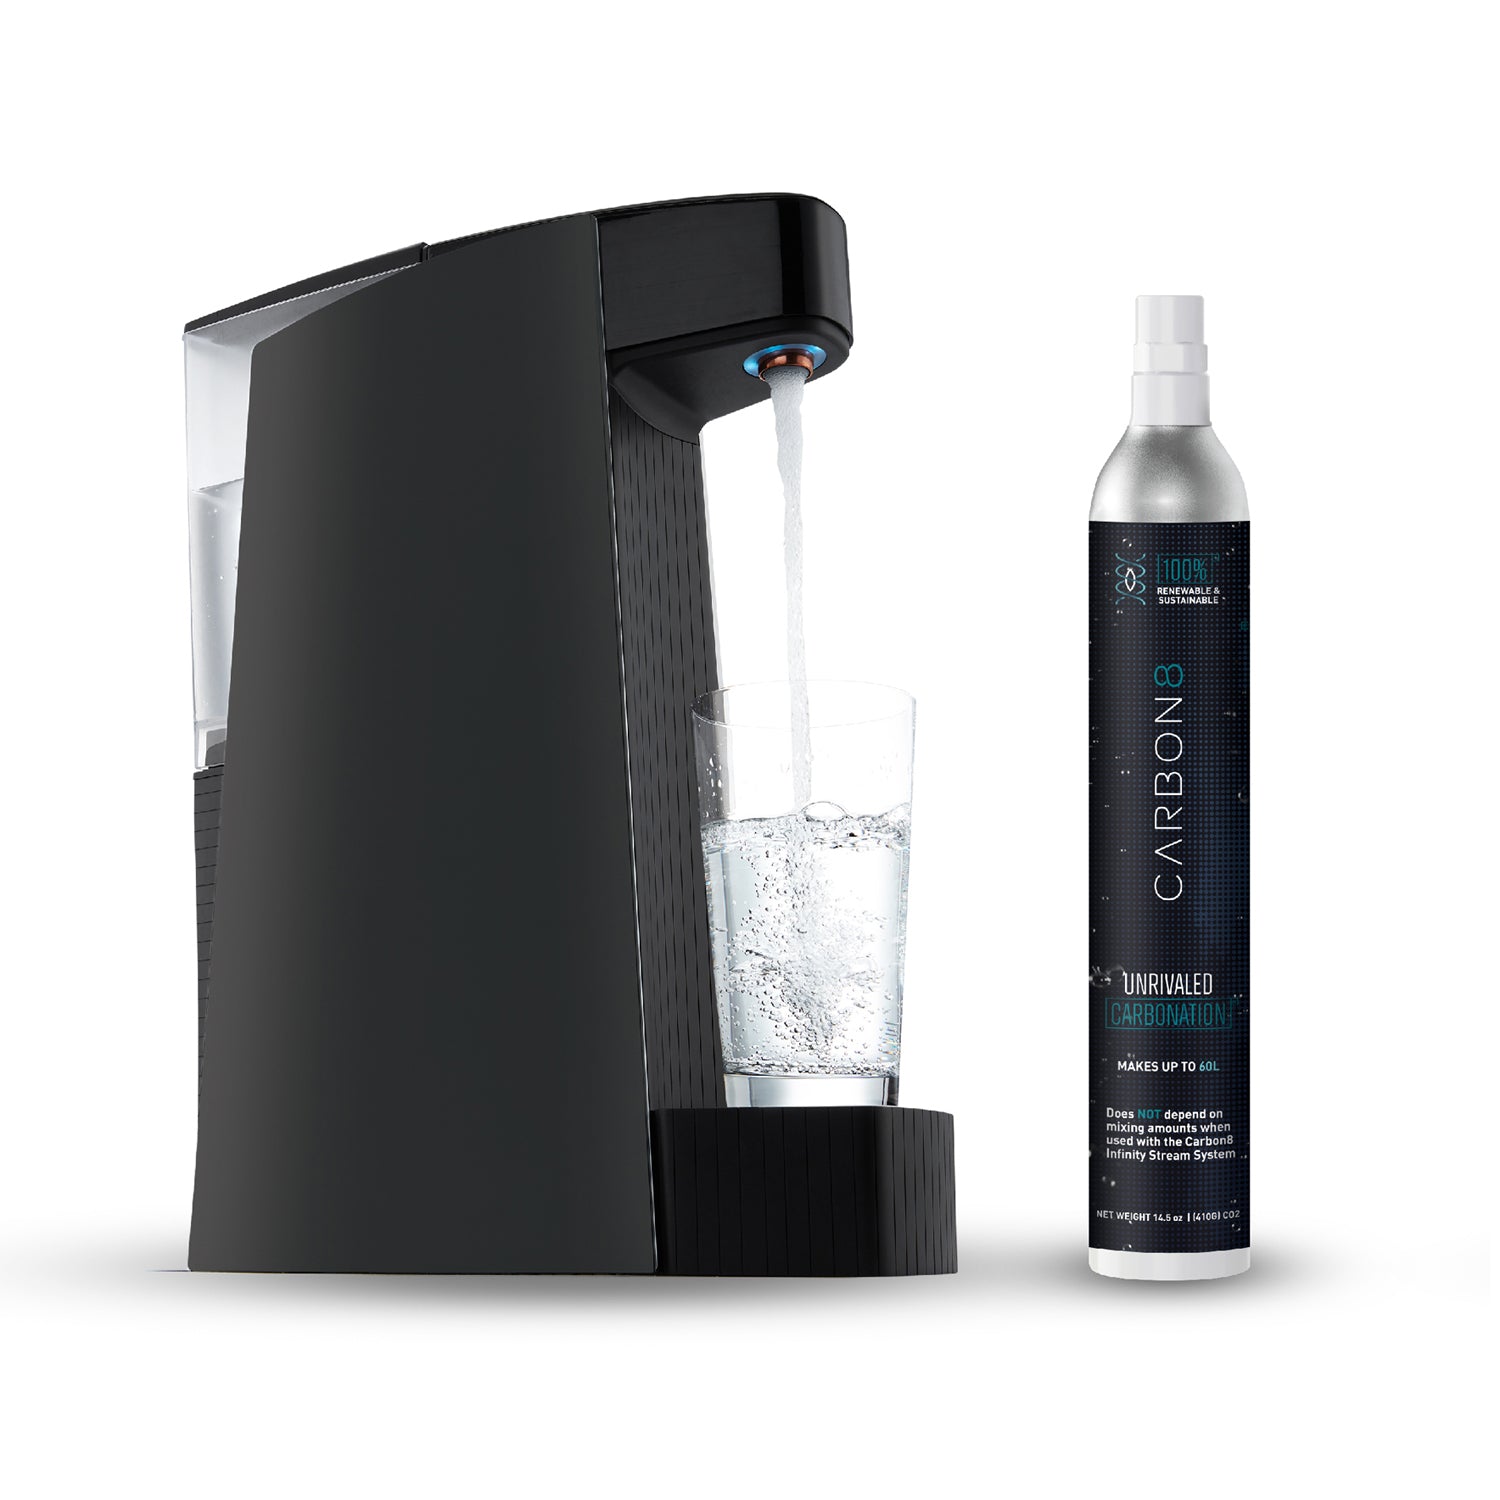 Carbon8 Kit - One Touch Sparkling Water Maker + Filter & Lemon8 + Co2 Cylinder